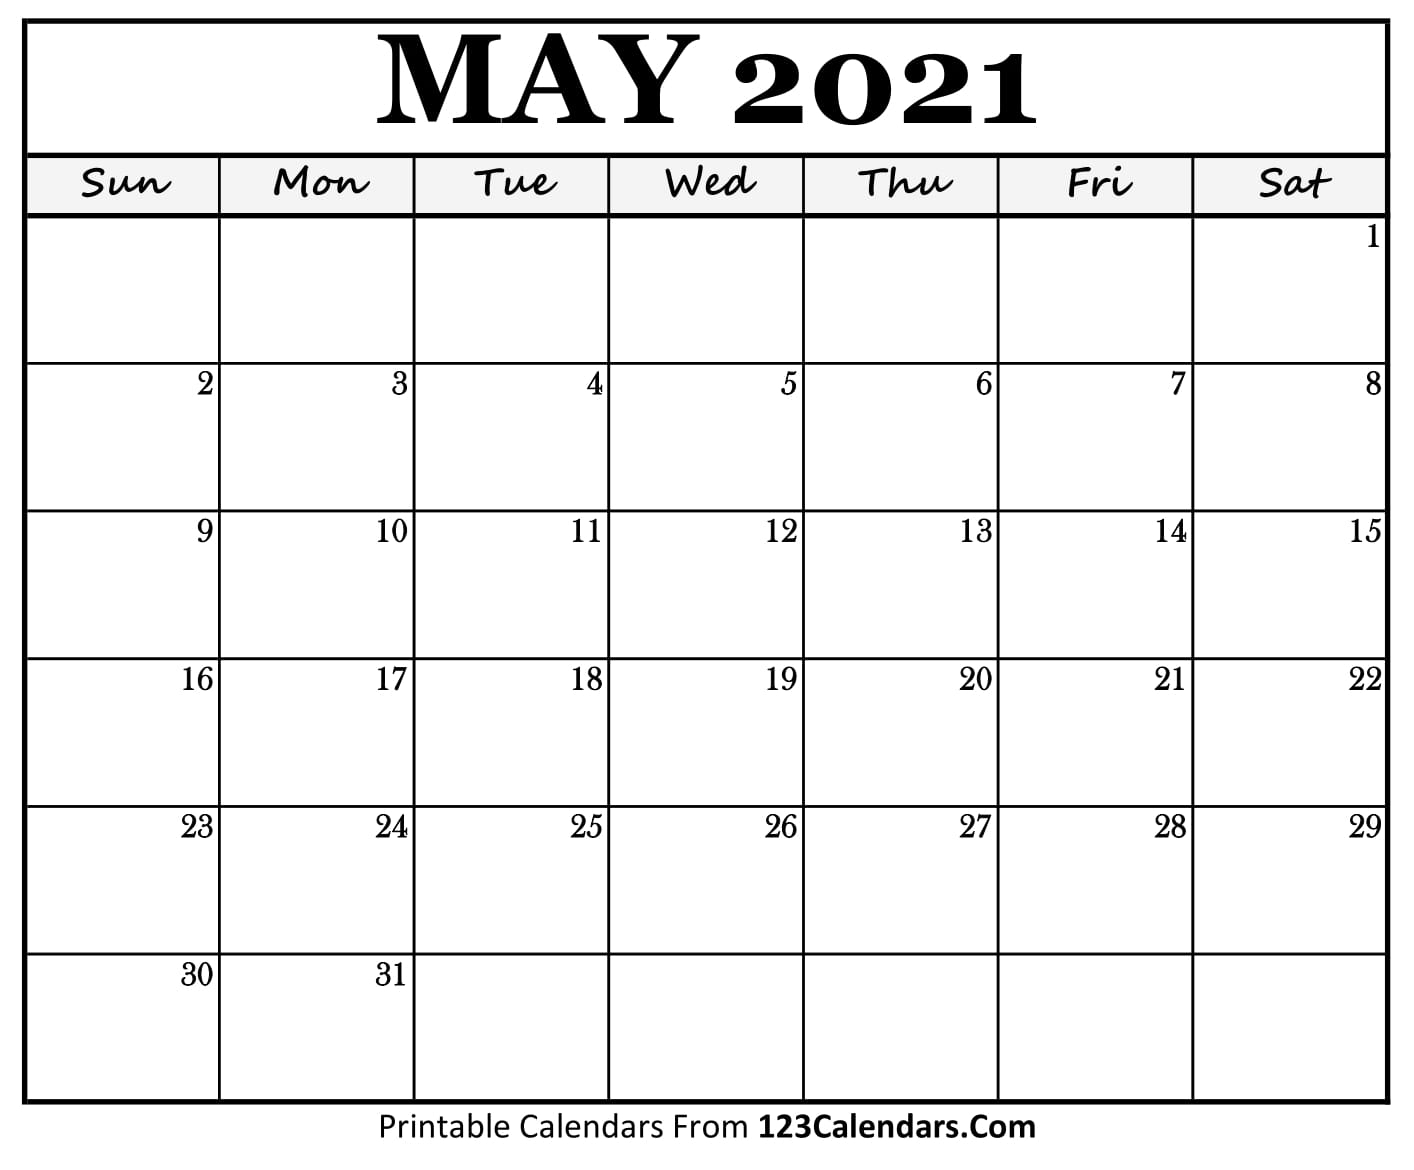 Printable May 2021 Calendar Templates | 123Calendars